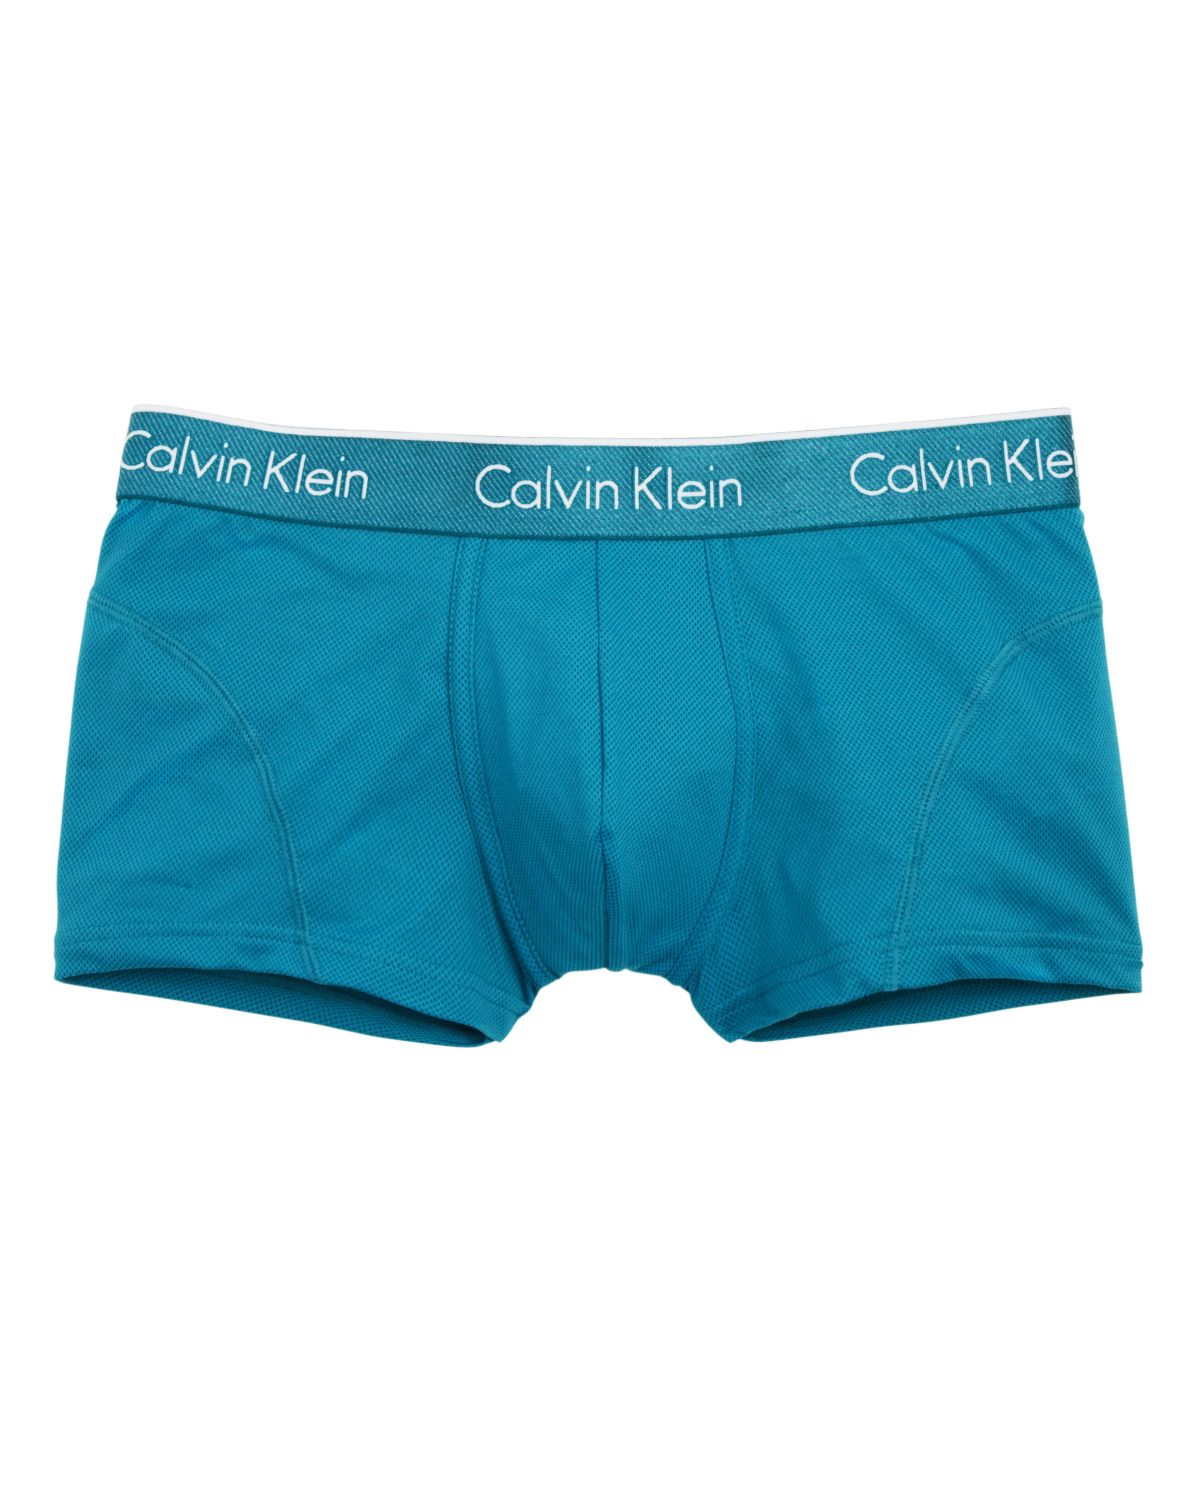 Lyst - Calvin Klein Air Fx Low Rise Trunks in Green for Men